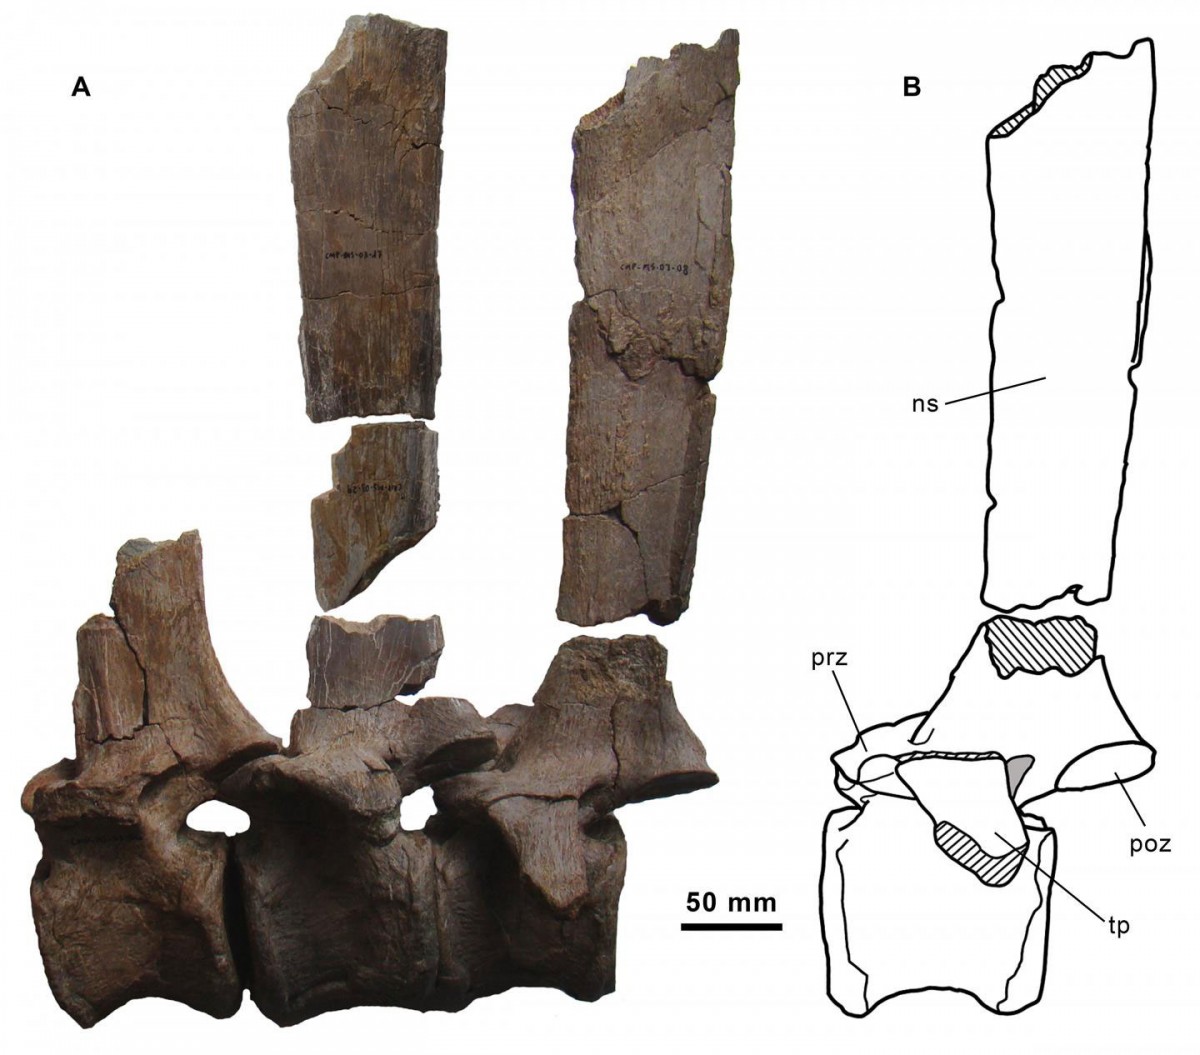 Dorsal vertebrae series of the holotype specimen of Morelladon beltrani. CMP-MS-03-06, -07 and -05 in left lateral (A) view. Interpretive drawing of CMP-MS-03-05 (including CMP-MS-03-08 neural spine) in left lateral (B) view. Abbreviations: ns, neural spine; poz, postzygapophysis; pre, prezygapophysis; rec, vertical recess; tp, transverse process.
Credit: Gasulla et al.